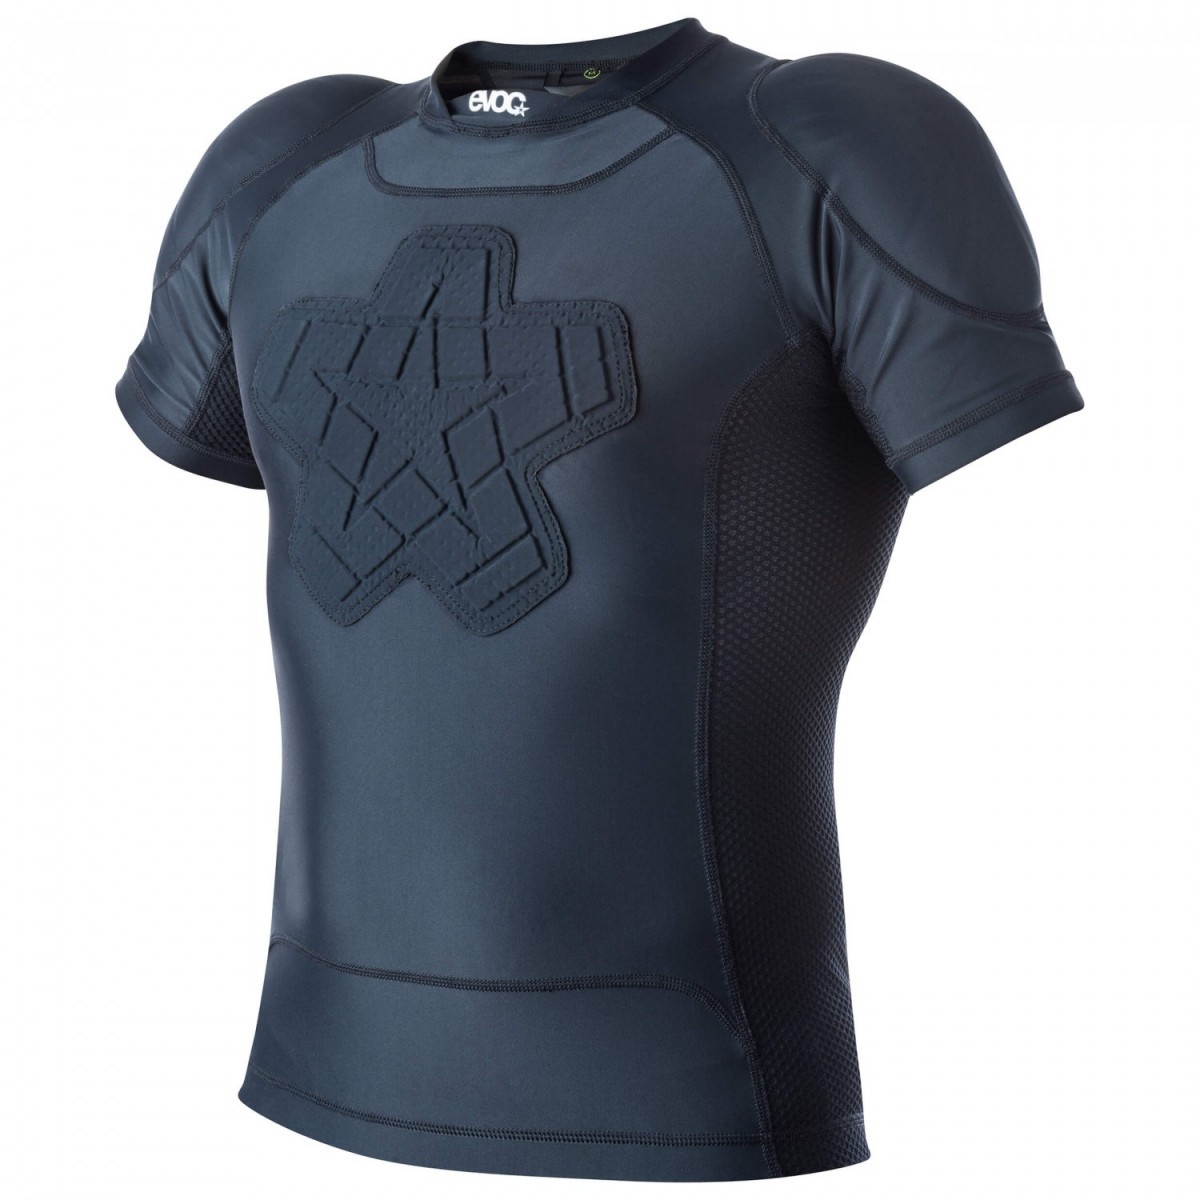 Evoc ( スポーツウェア·アクセサリー Enduro Enduro Black )：クライムスワールド Shirt )スポーツ·アウトドア  Shirt Shirt 店EVOC イーボック